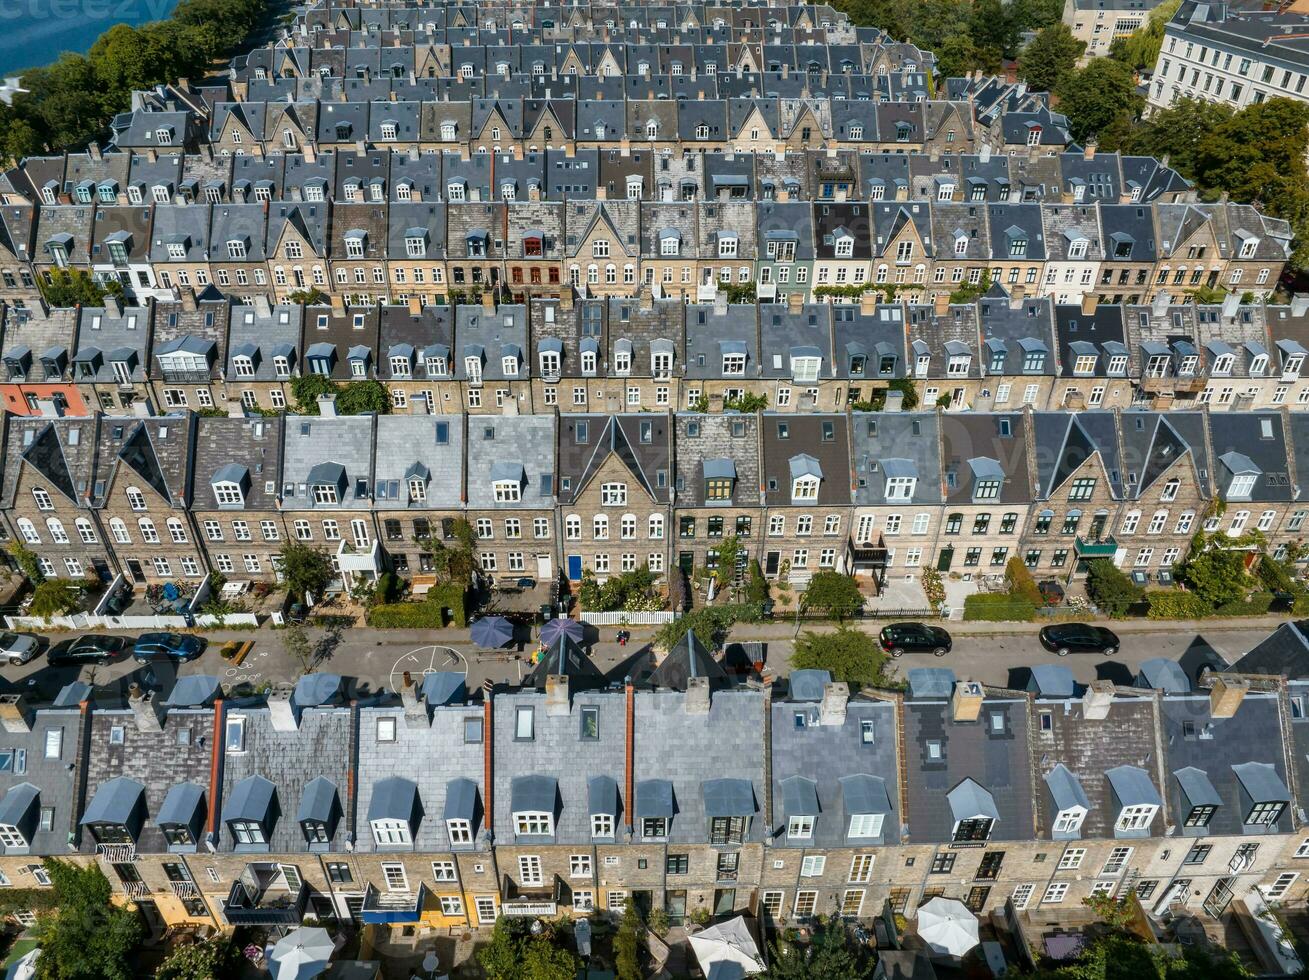 Aerial view of the rooftops of Kartoffelraekkerne neighborhood, in Oesterbro, Copenhagen, Denmark. photo